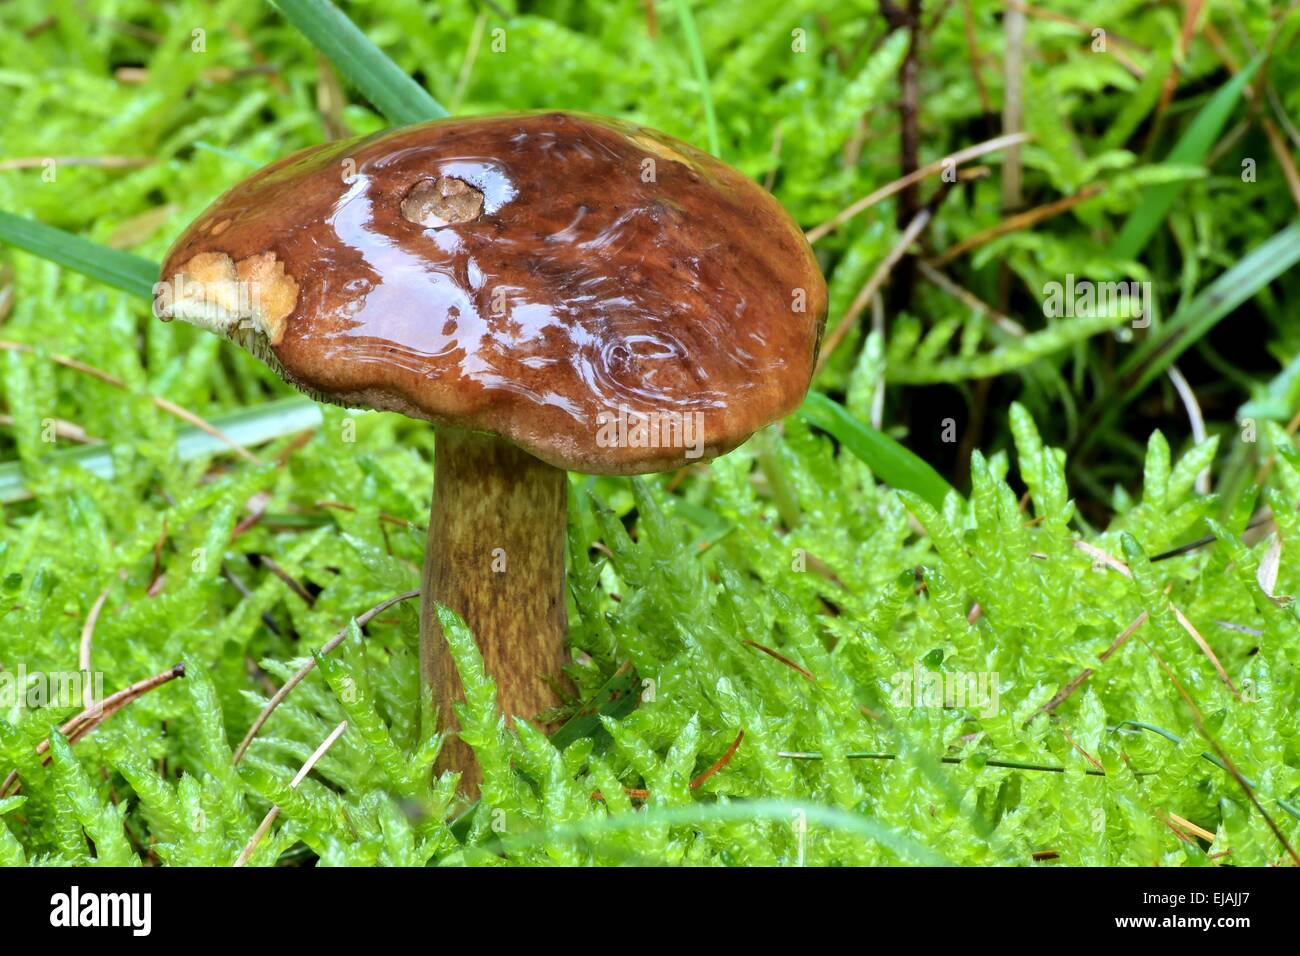 edible mushroom Stock Photo